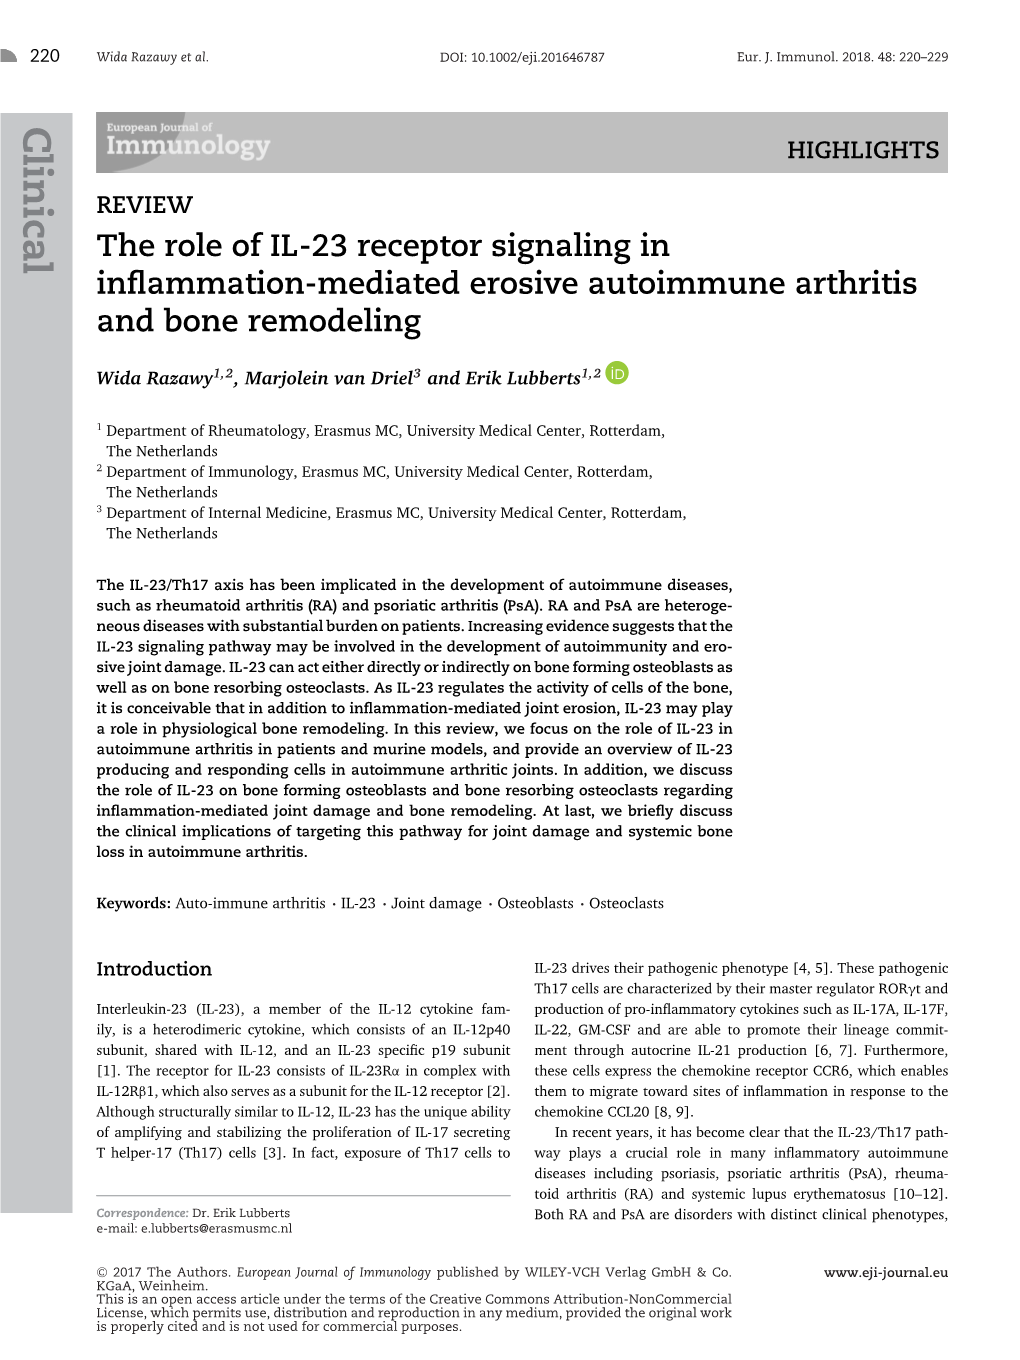 Mediated Erosive Autoimmune Arthritis and Bone Remo